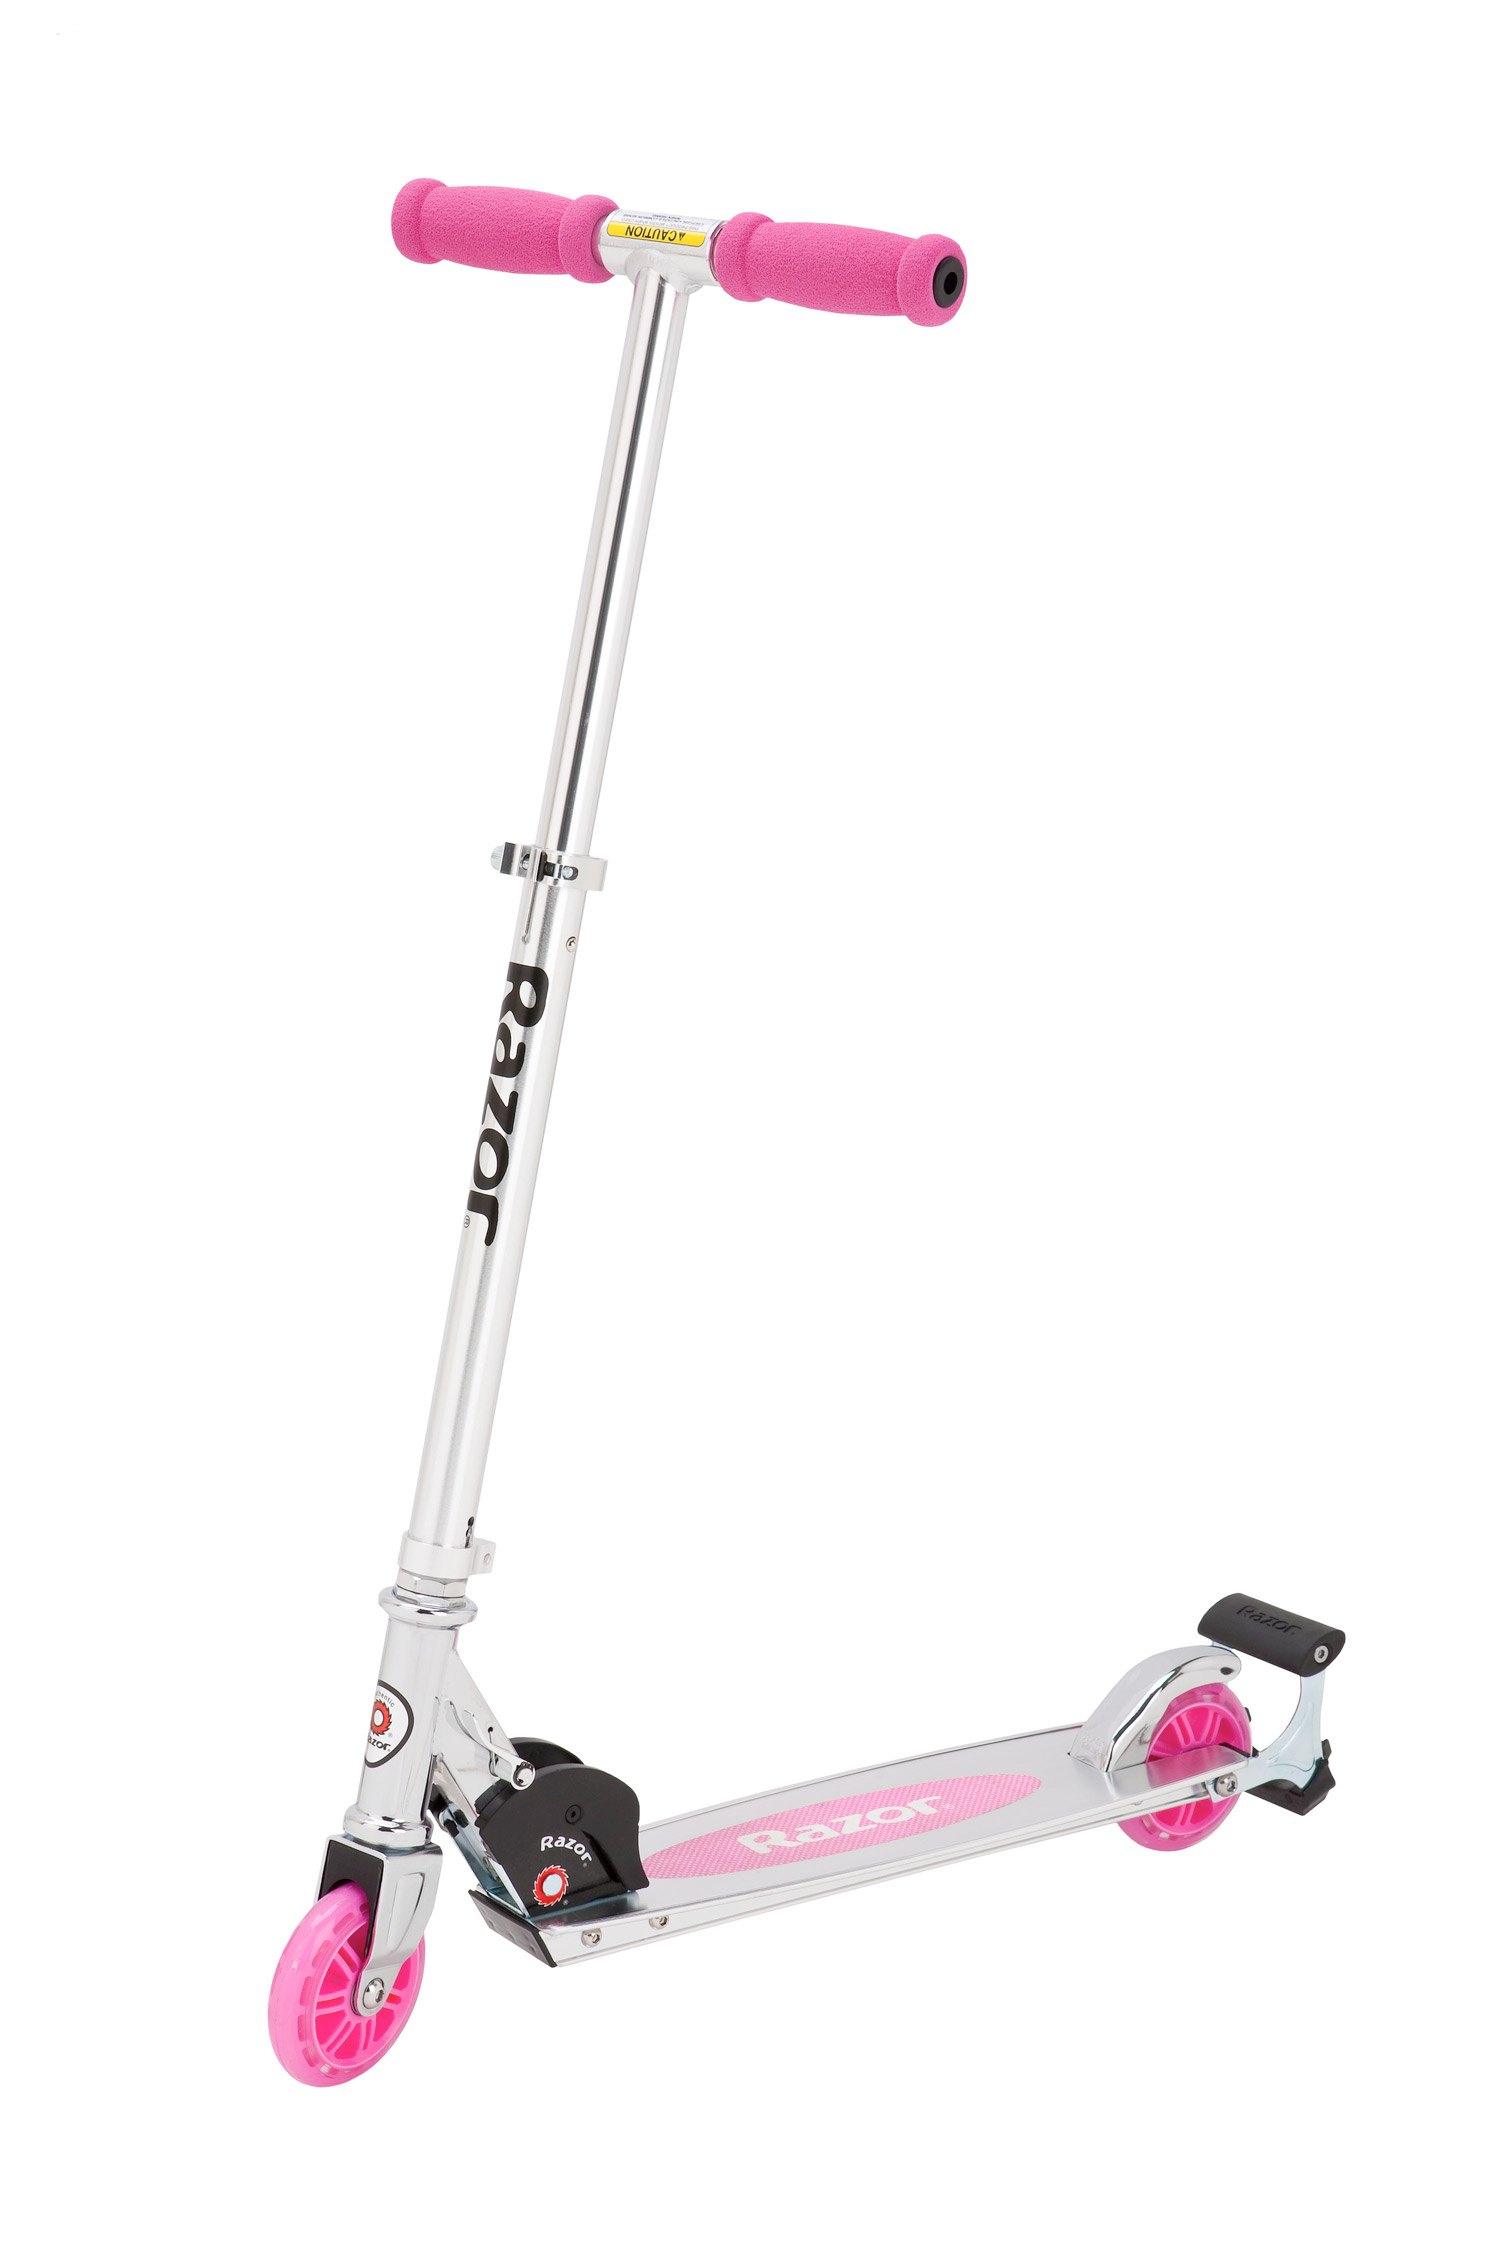 Razor Scooter Pink Light Up Wheels